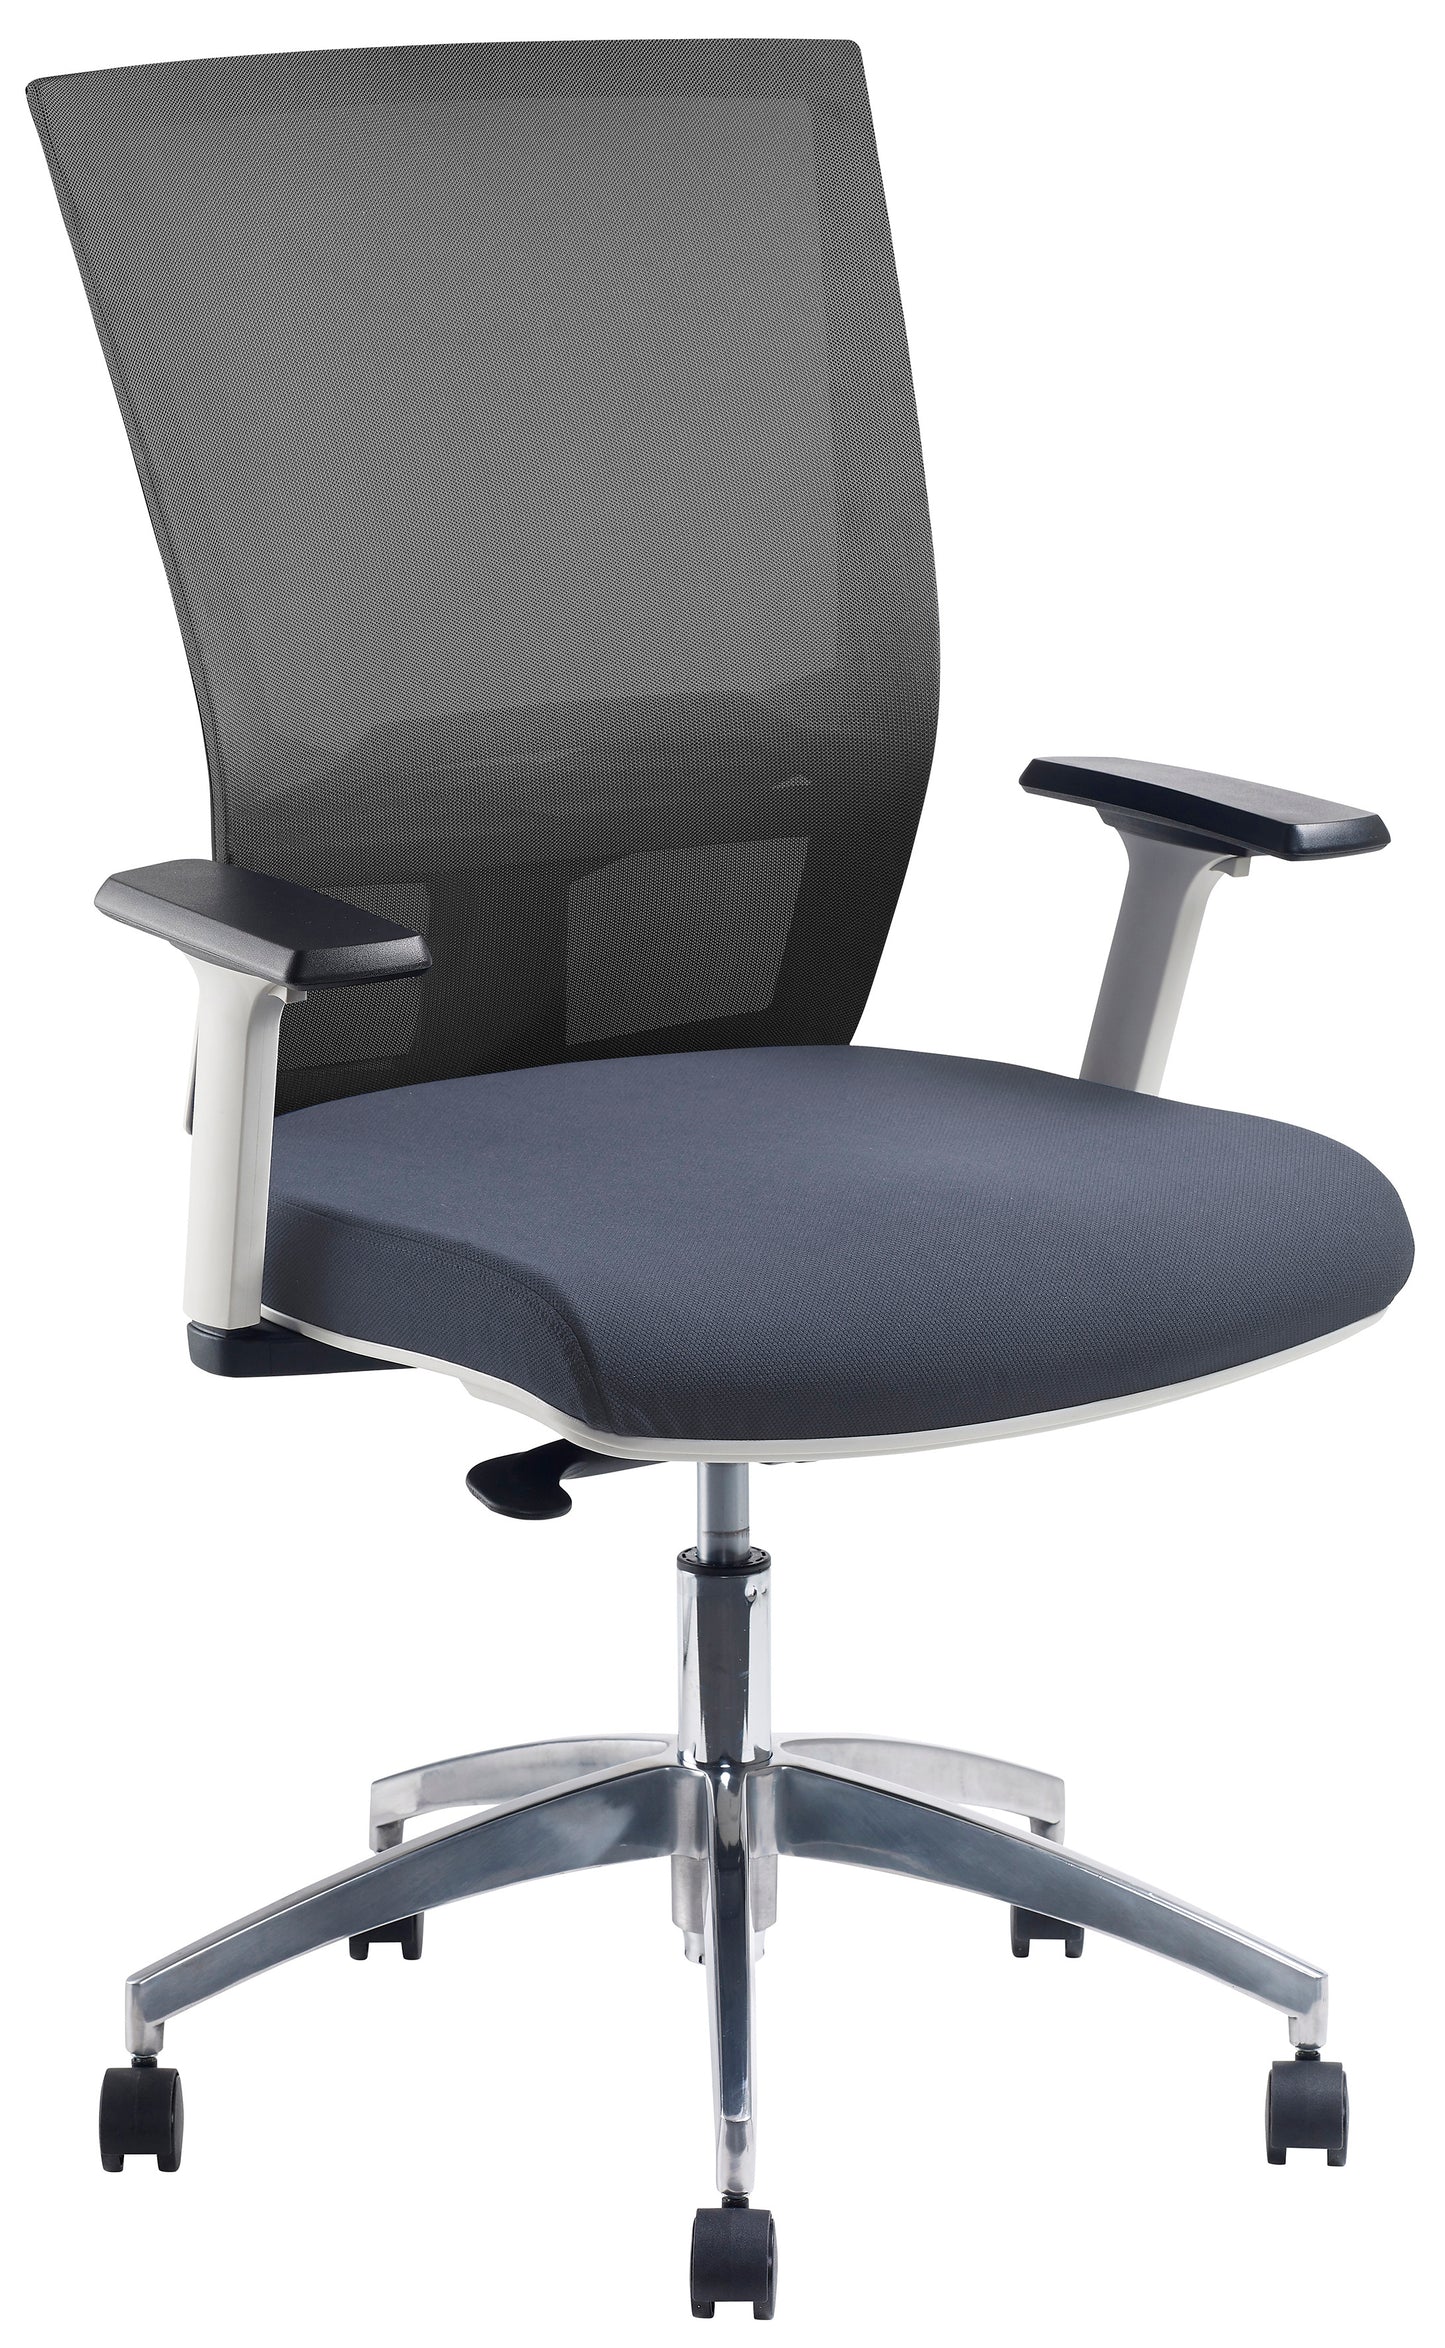 Chair - Advance Air Plus White Frame with Arms